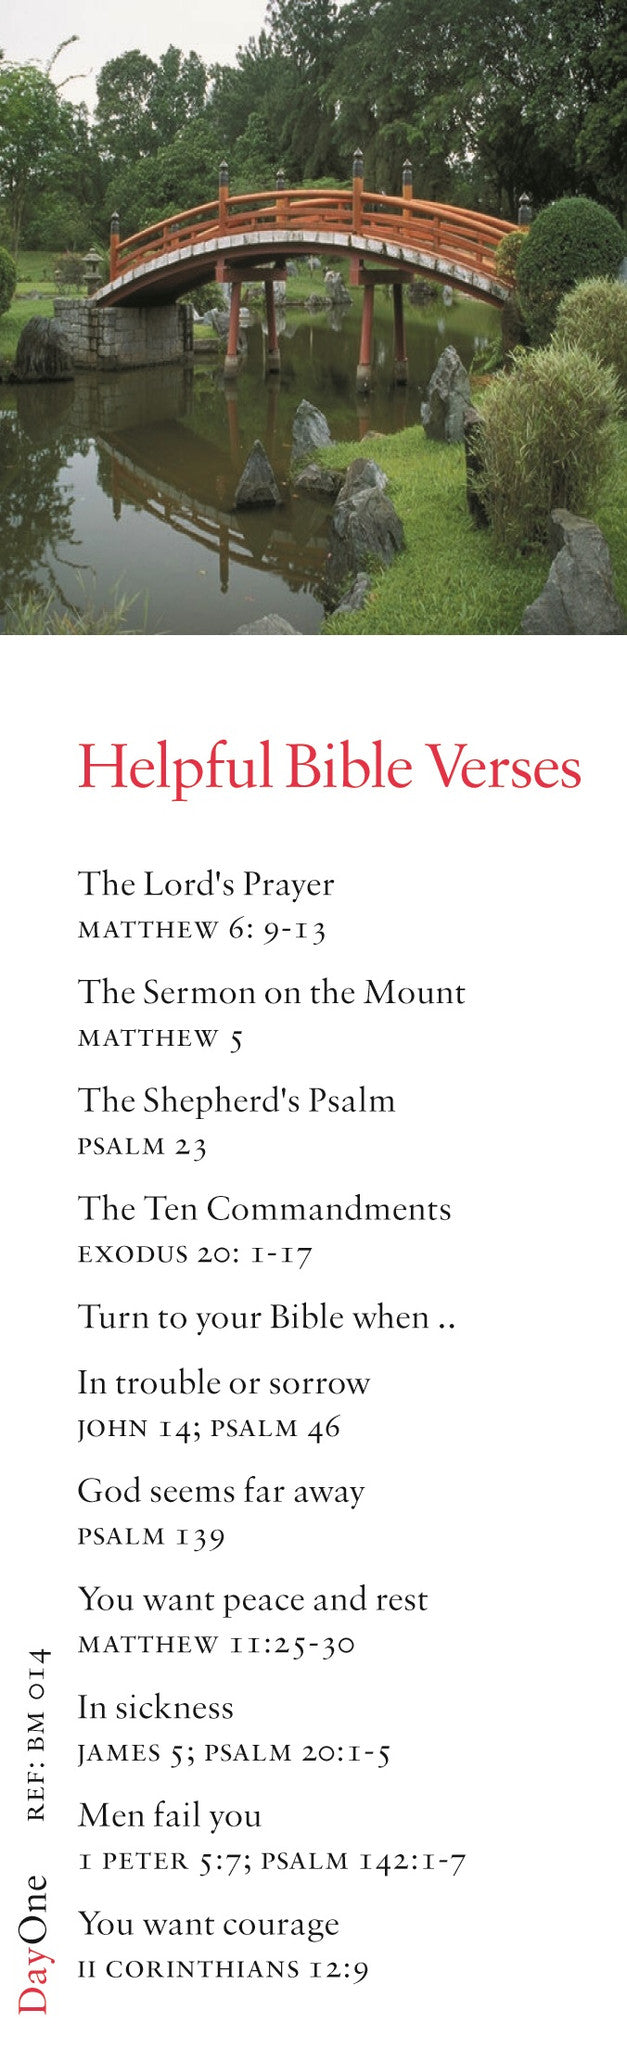 Helpful Bible verses